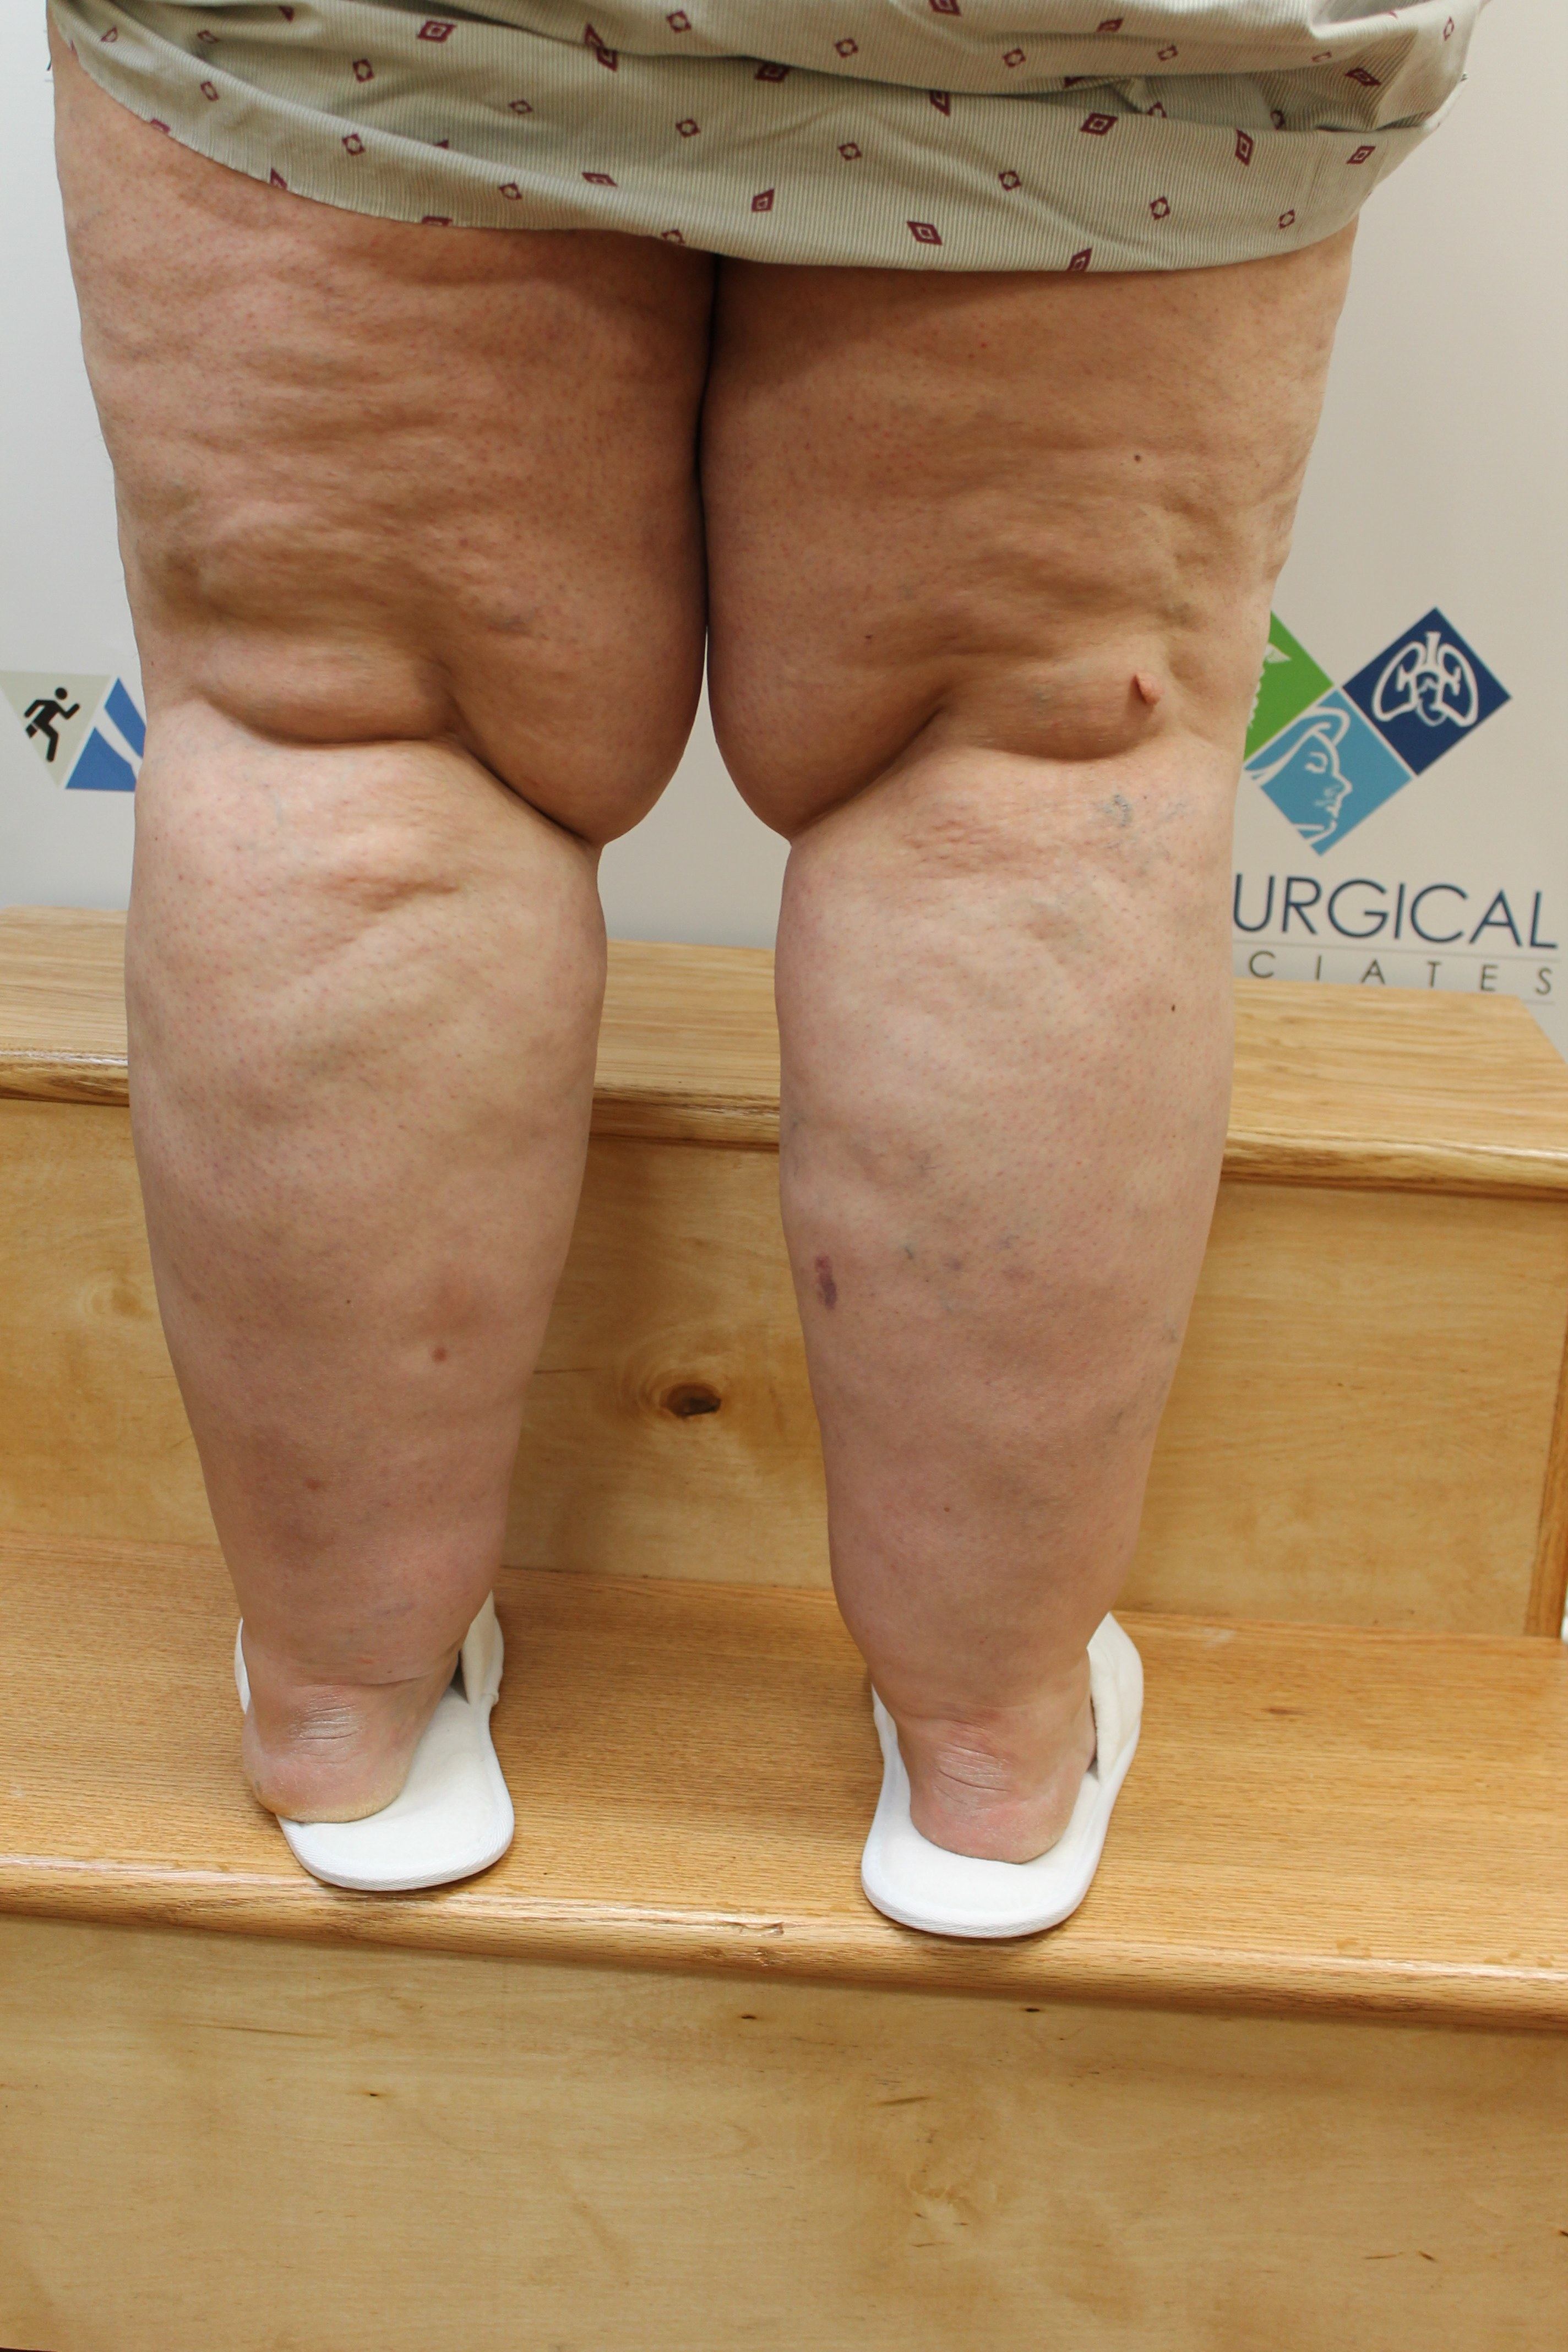 Vicki's legs show the effects of lipedema